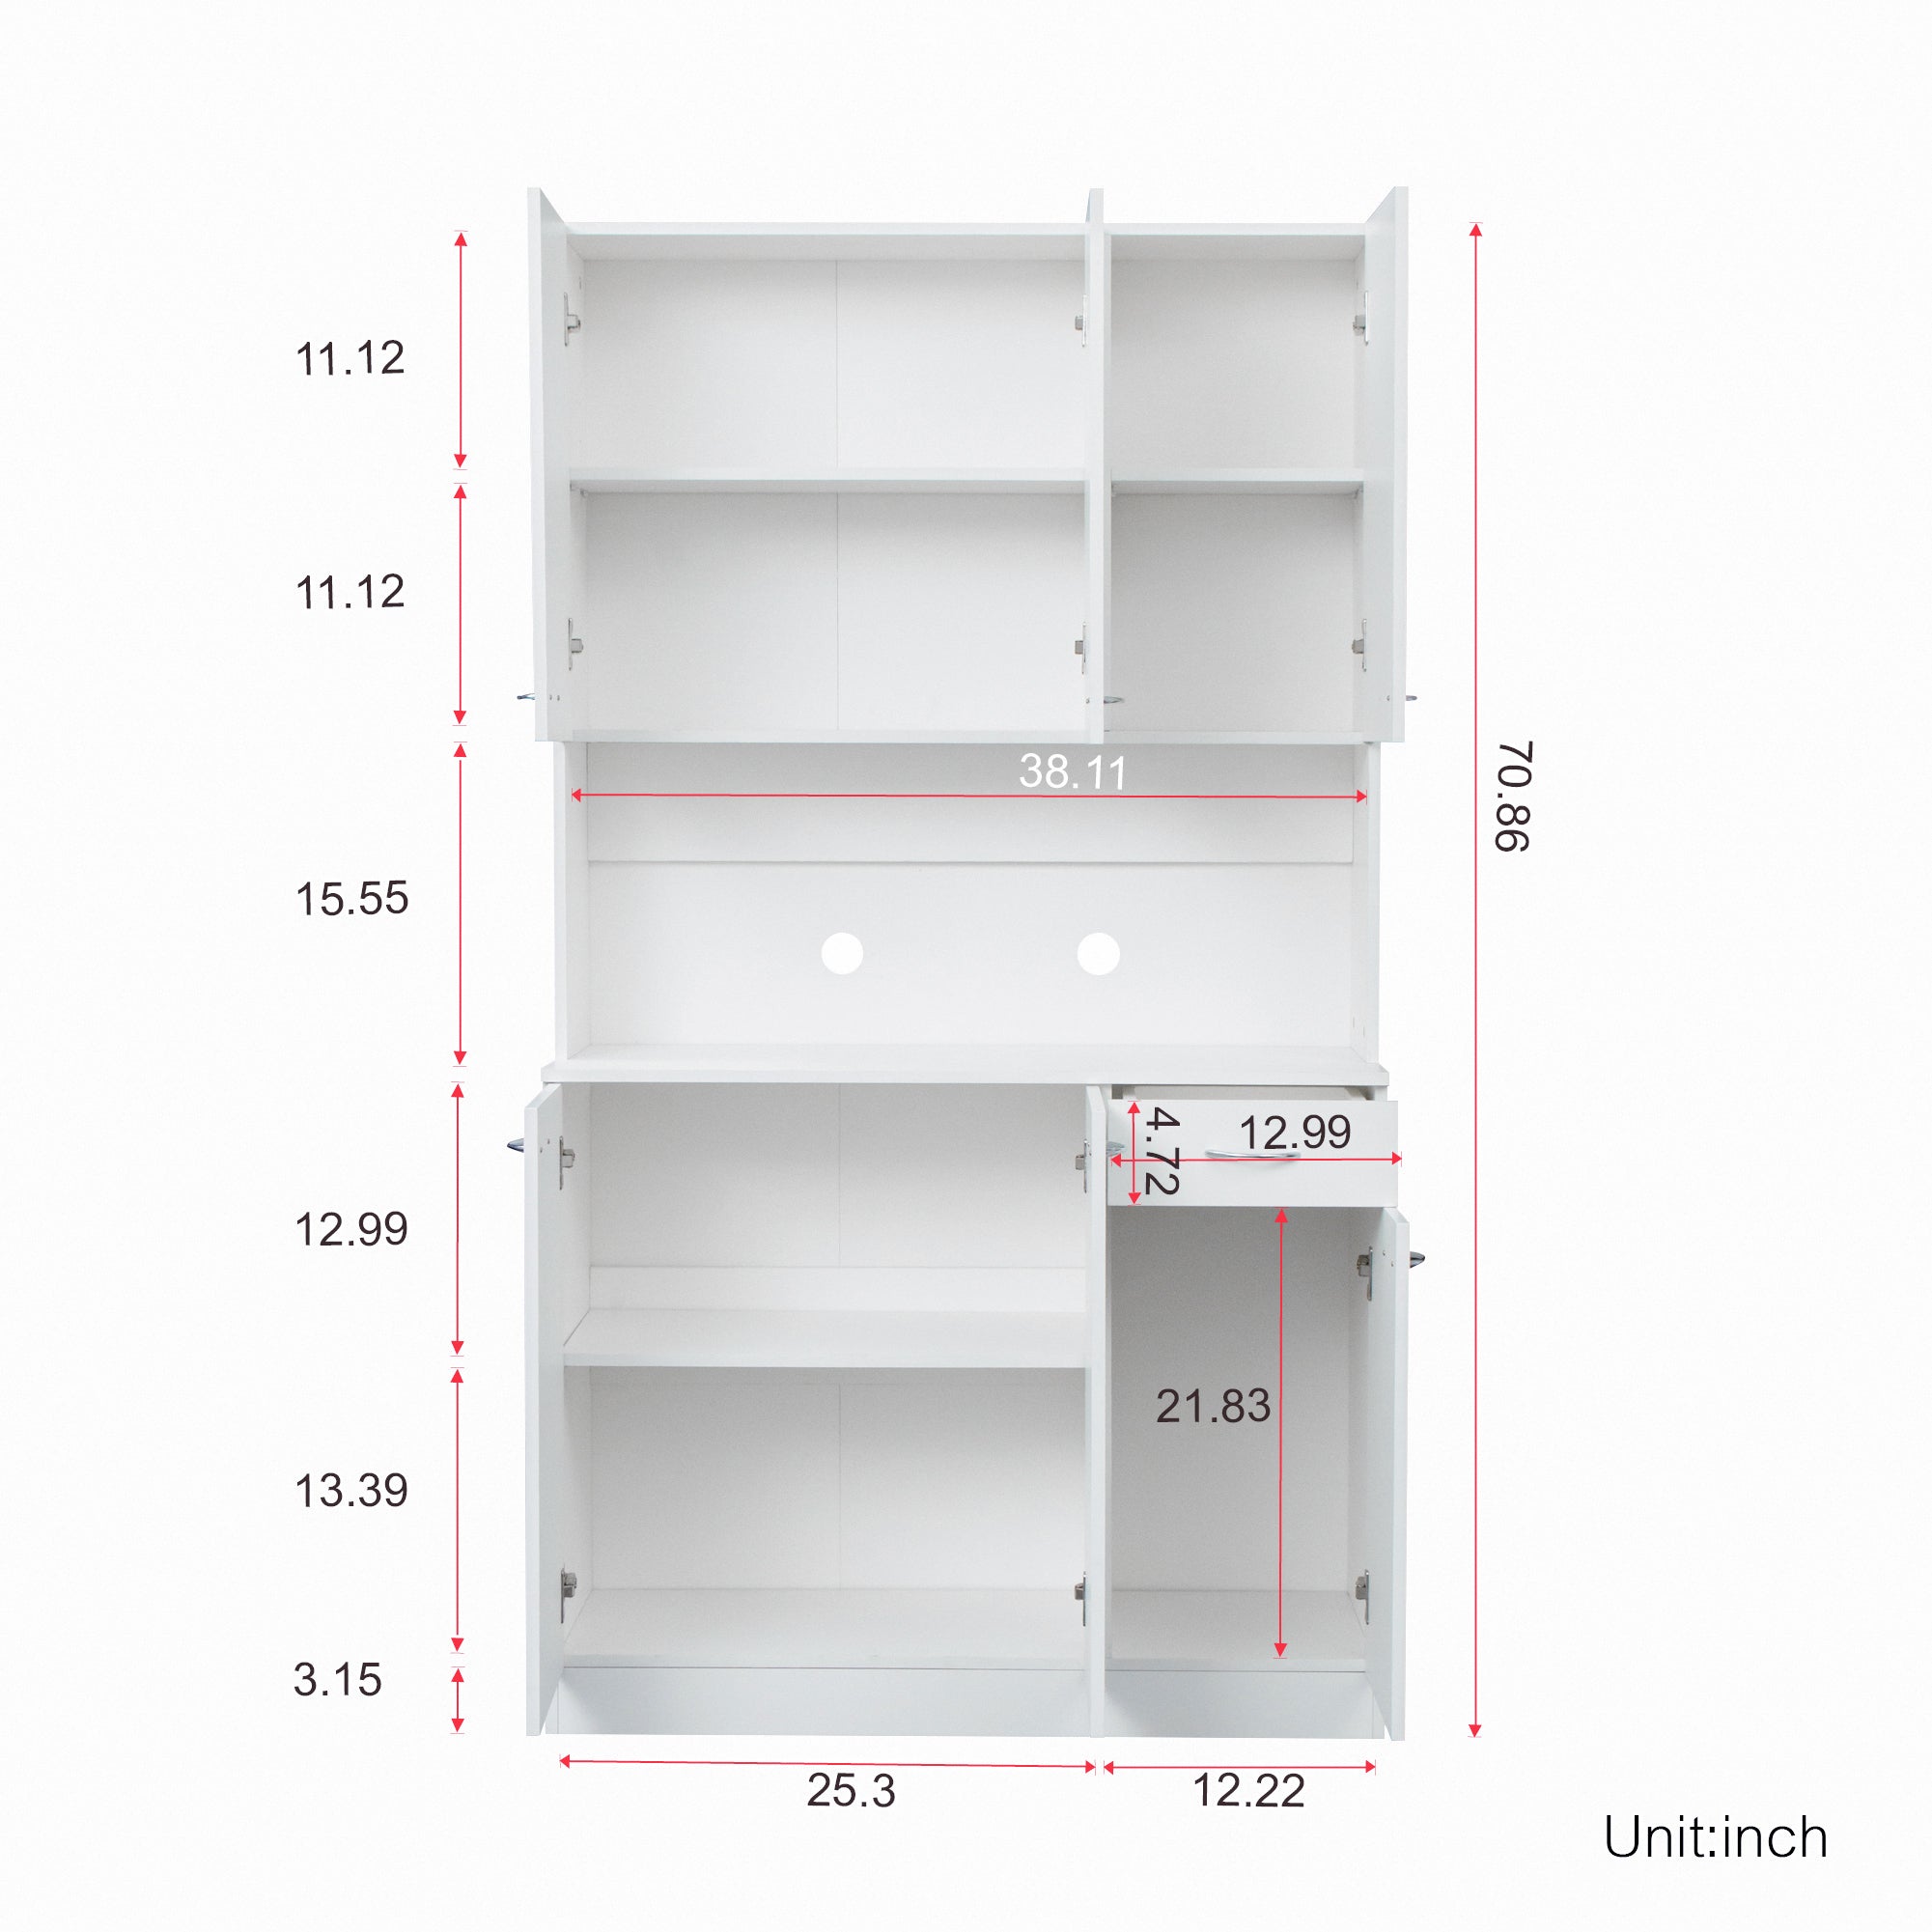 70.87" Tall White Storage Organize Cabinet, Pantry Cabinet, Garage Cabinet